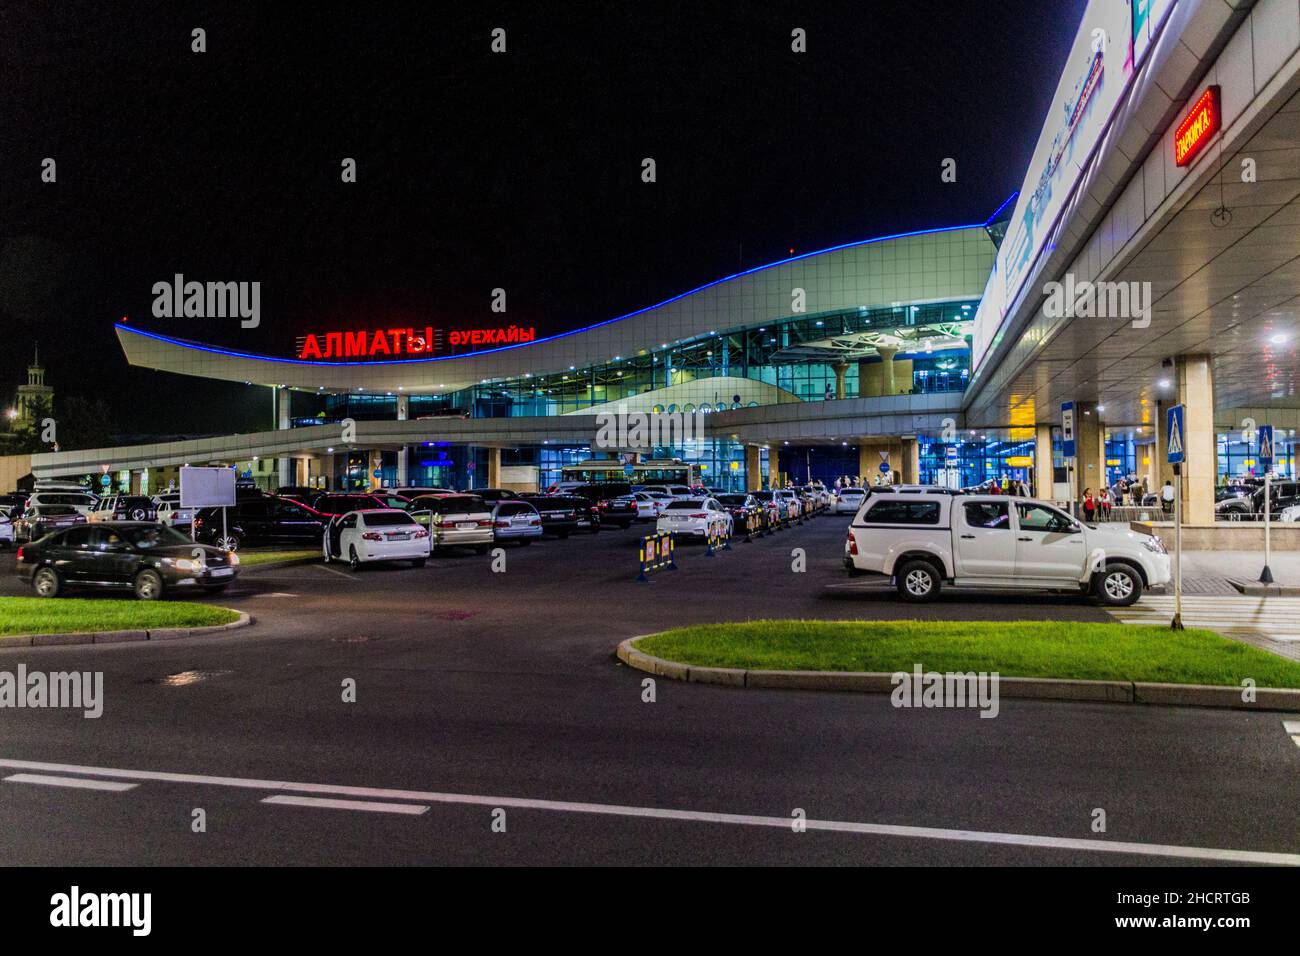 ALMATY, KAZAKHSTAN - AUGUST 1, 2018: Night view of Almaty International Airport, Kazakhstan. Stock Photo